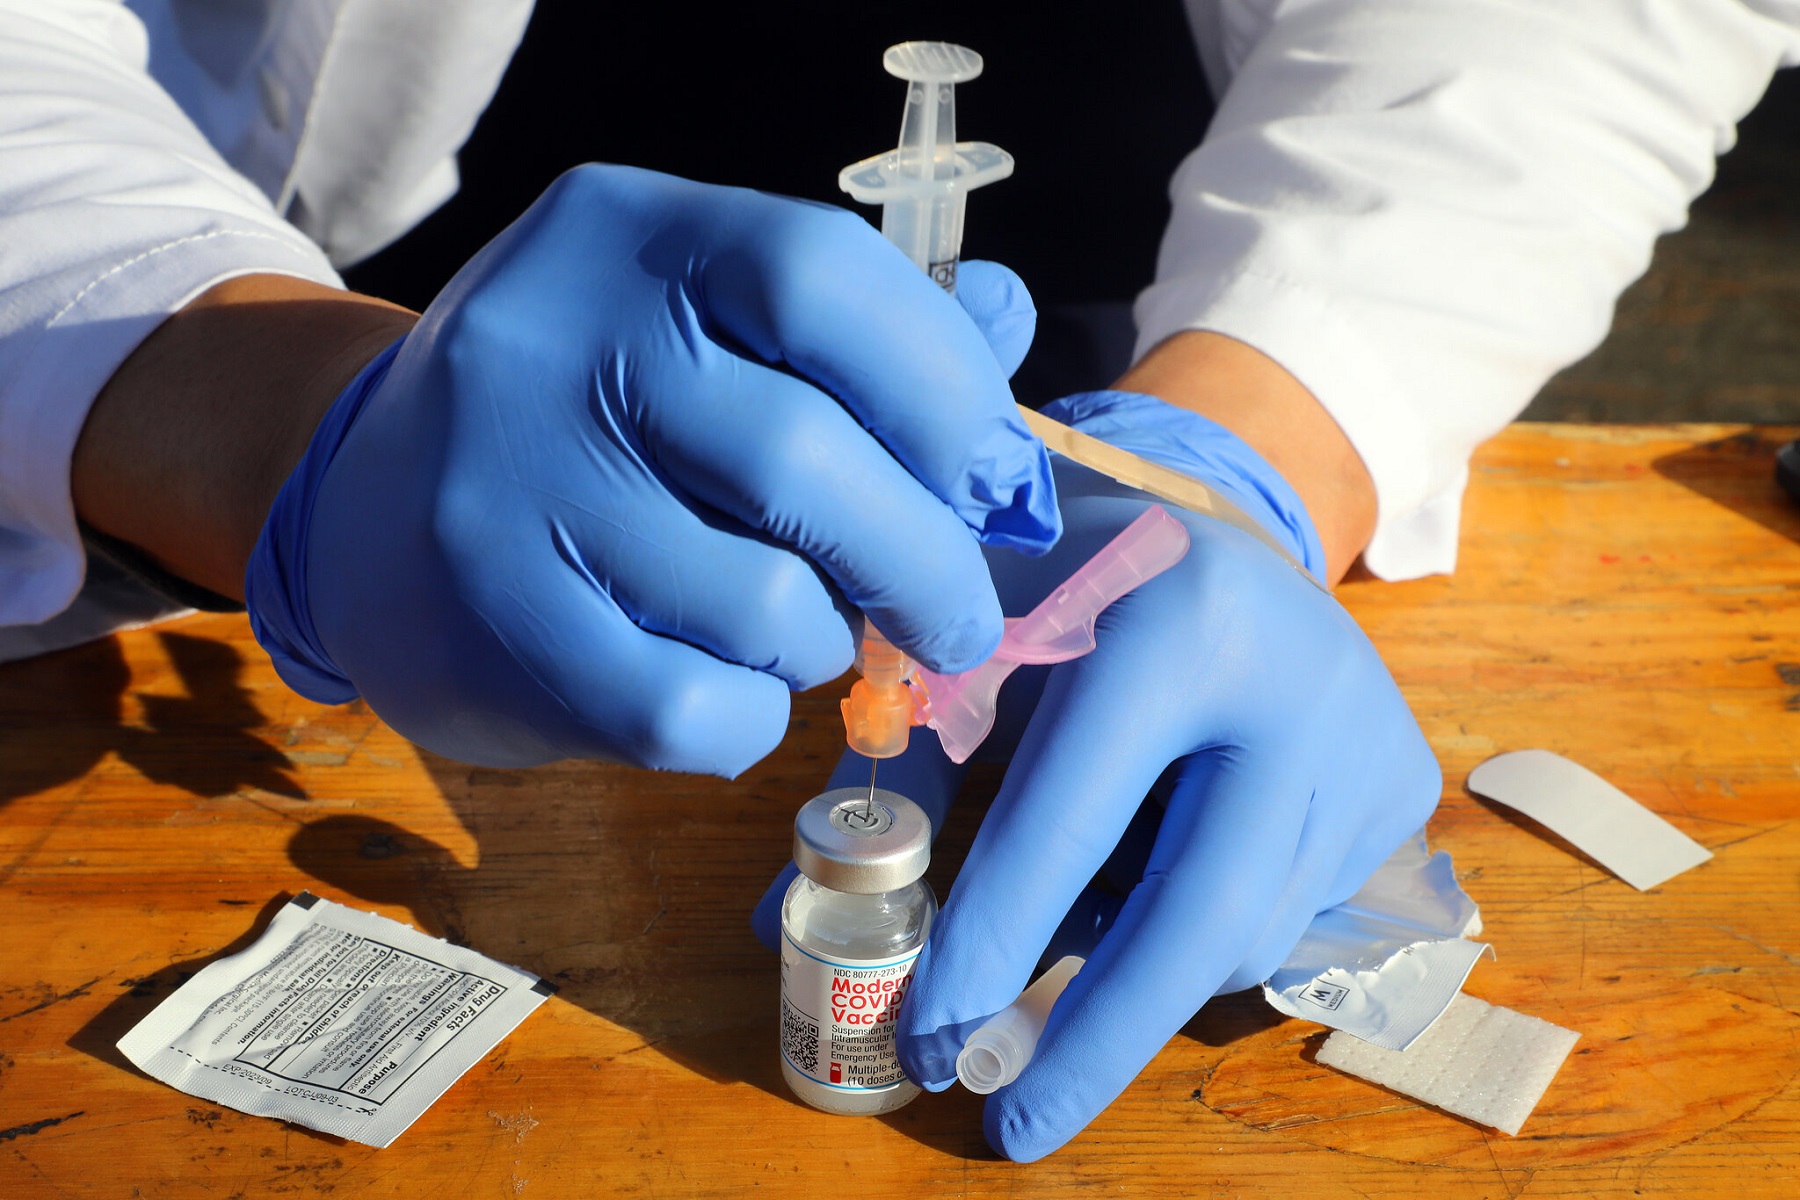 Pfizer Εμβολιασμός: Άνθρωπος της Χαβάης λαμβάνει την τρίτη δόση εμβολίου covid-19 σε πειραματική δοκιμή